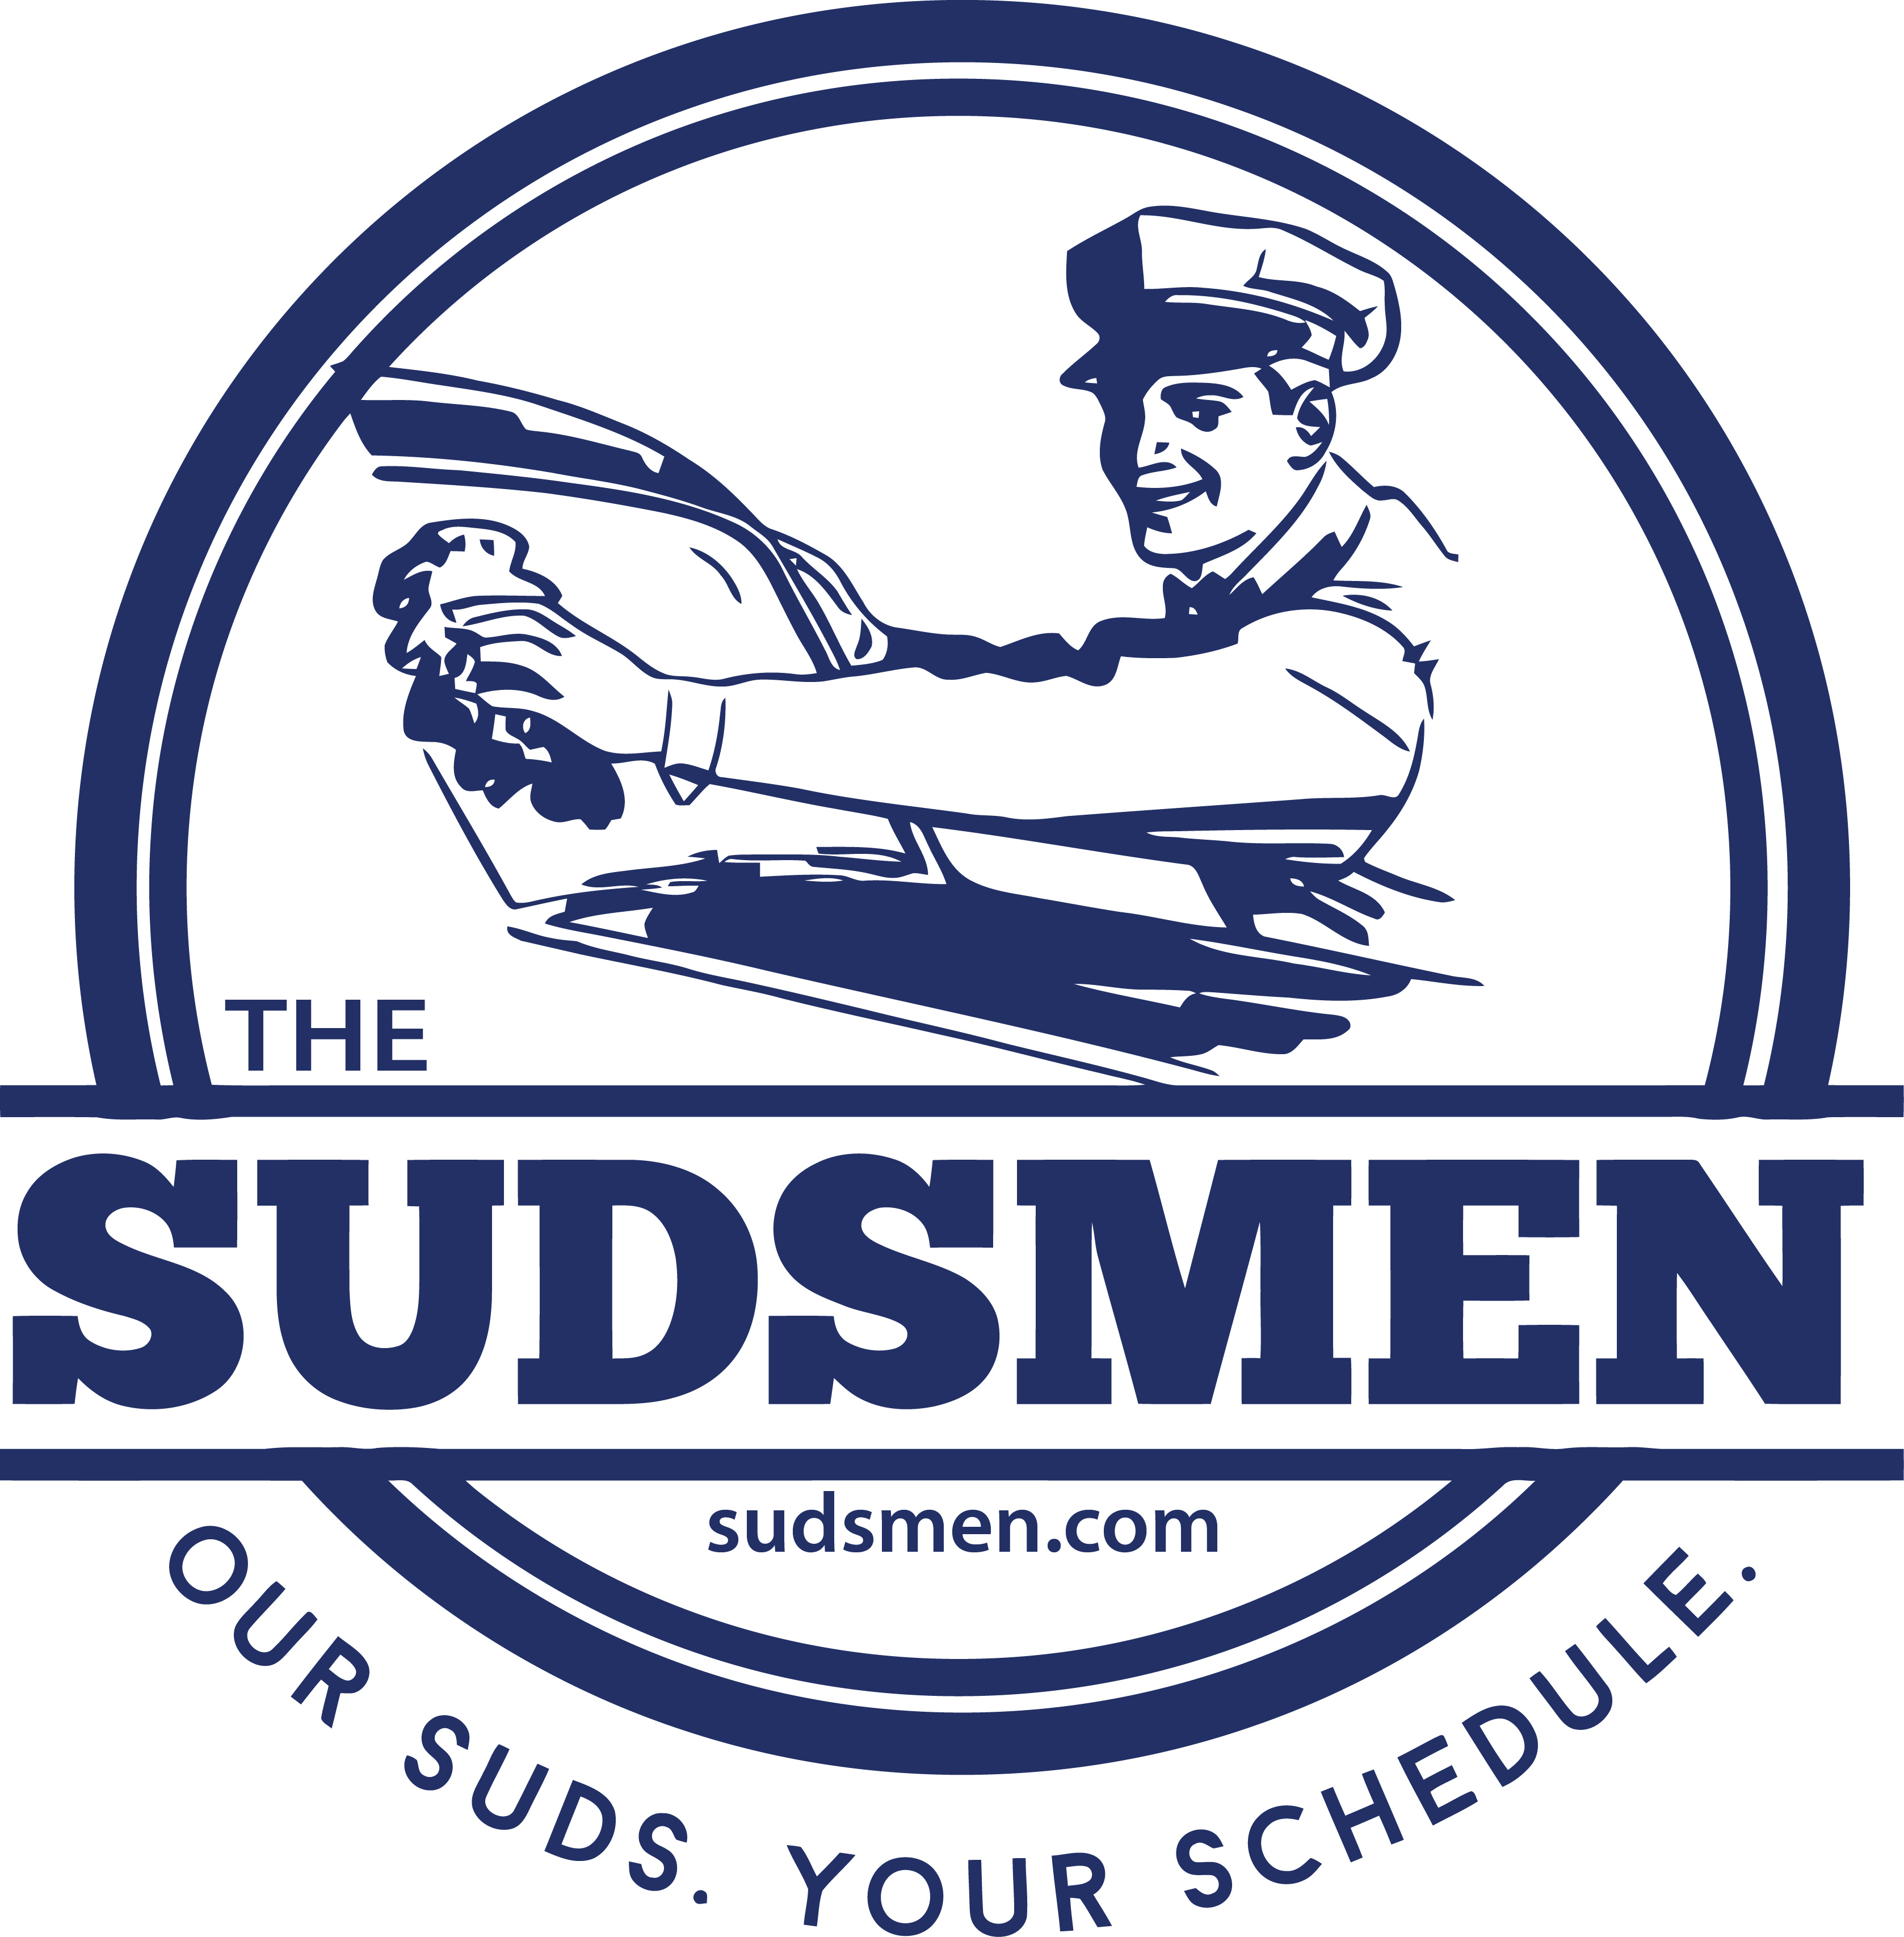 Company Logo For Sudsman'